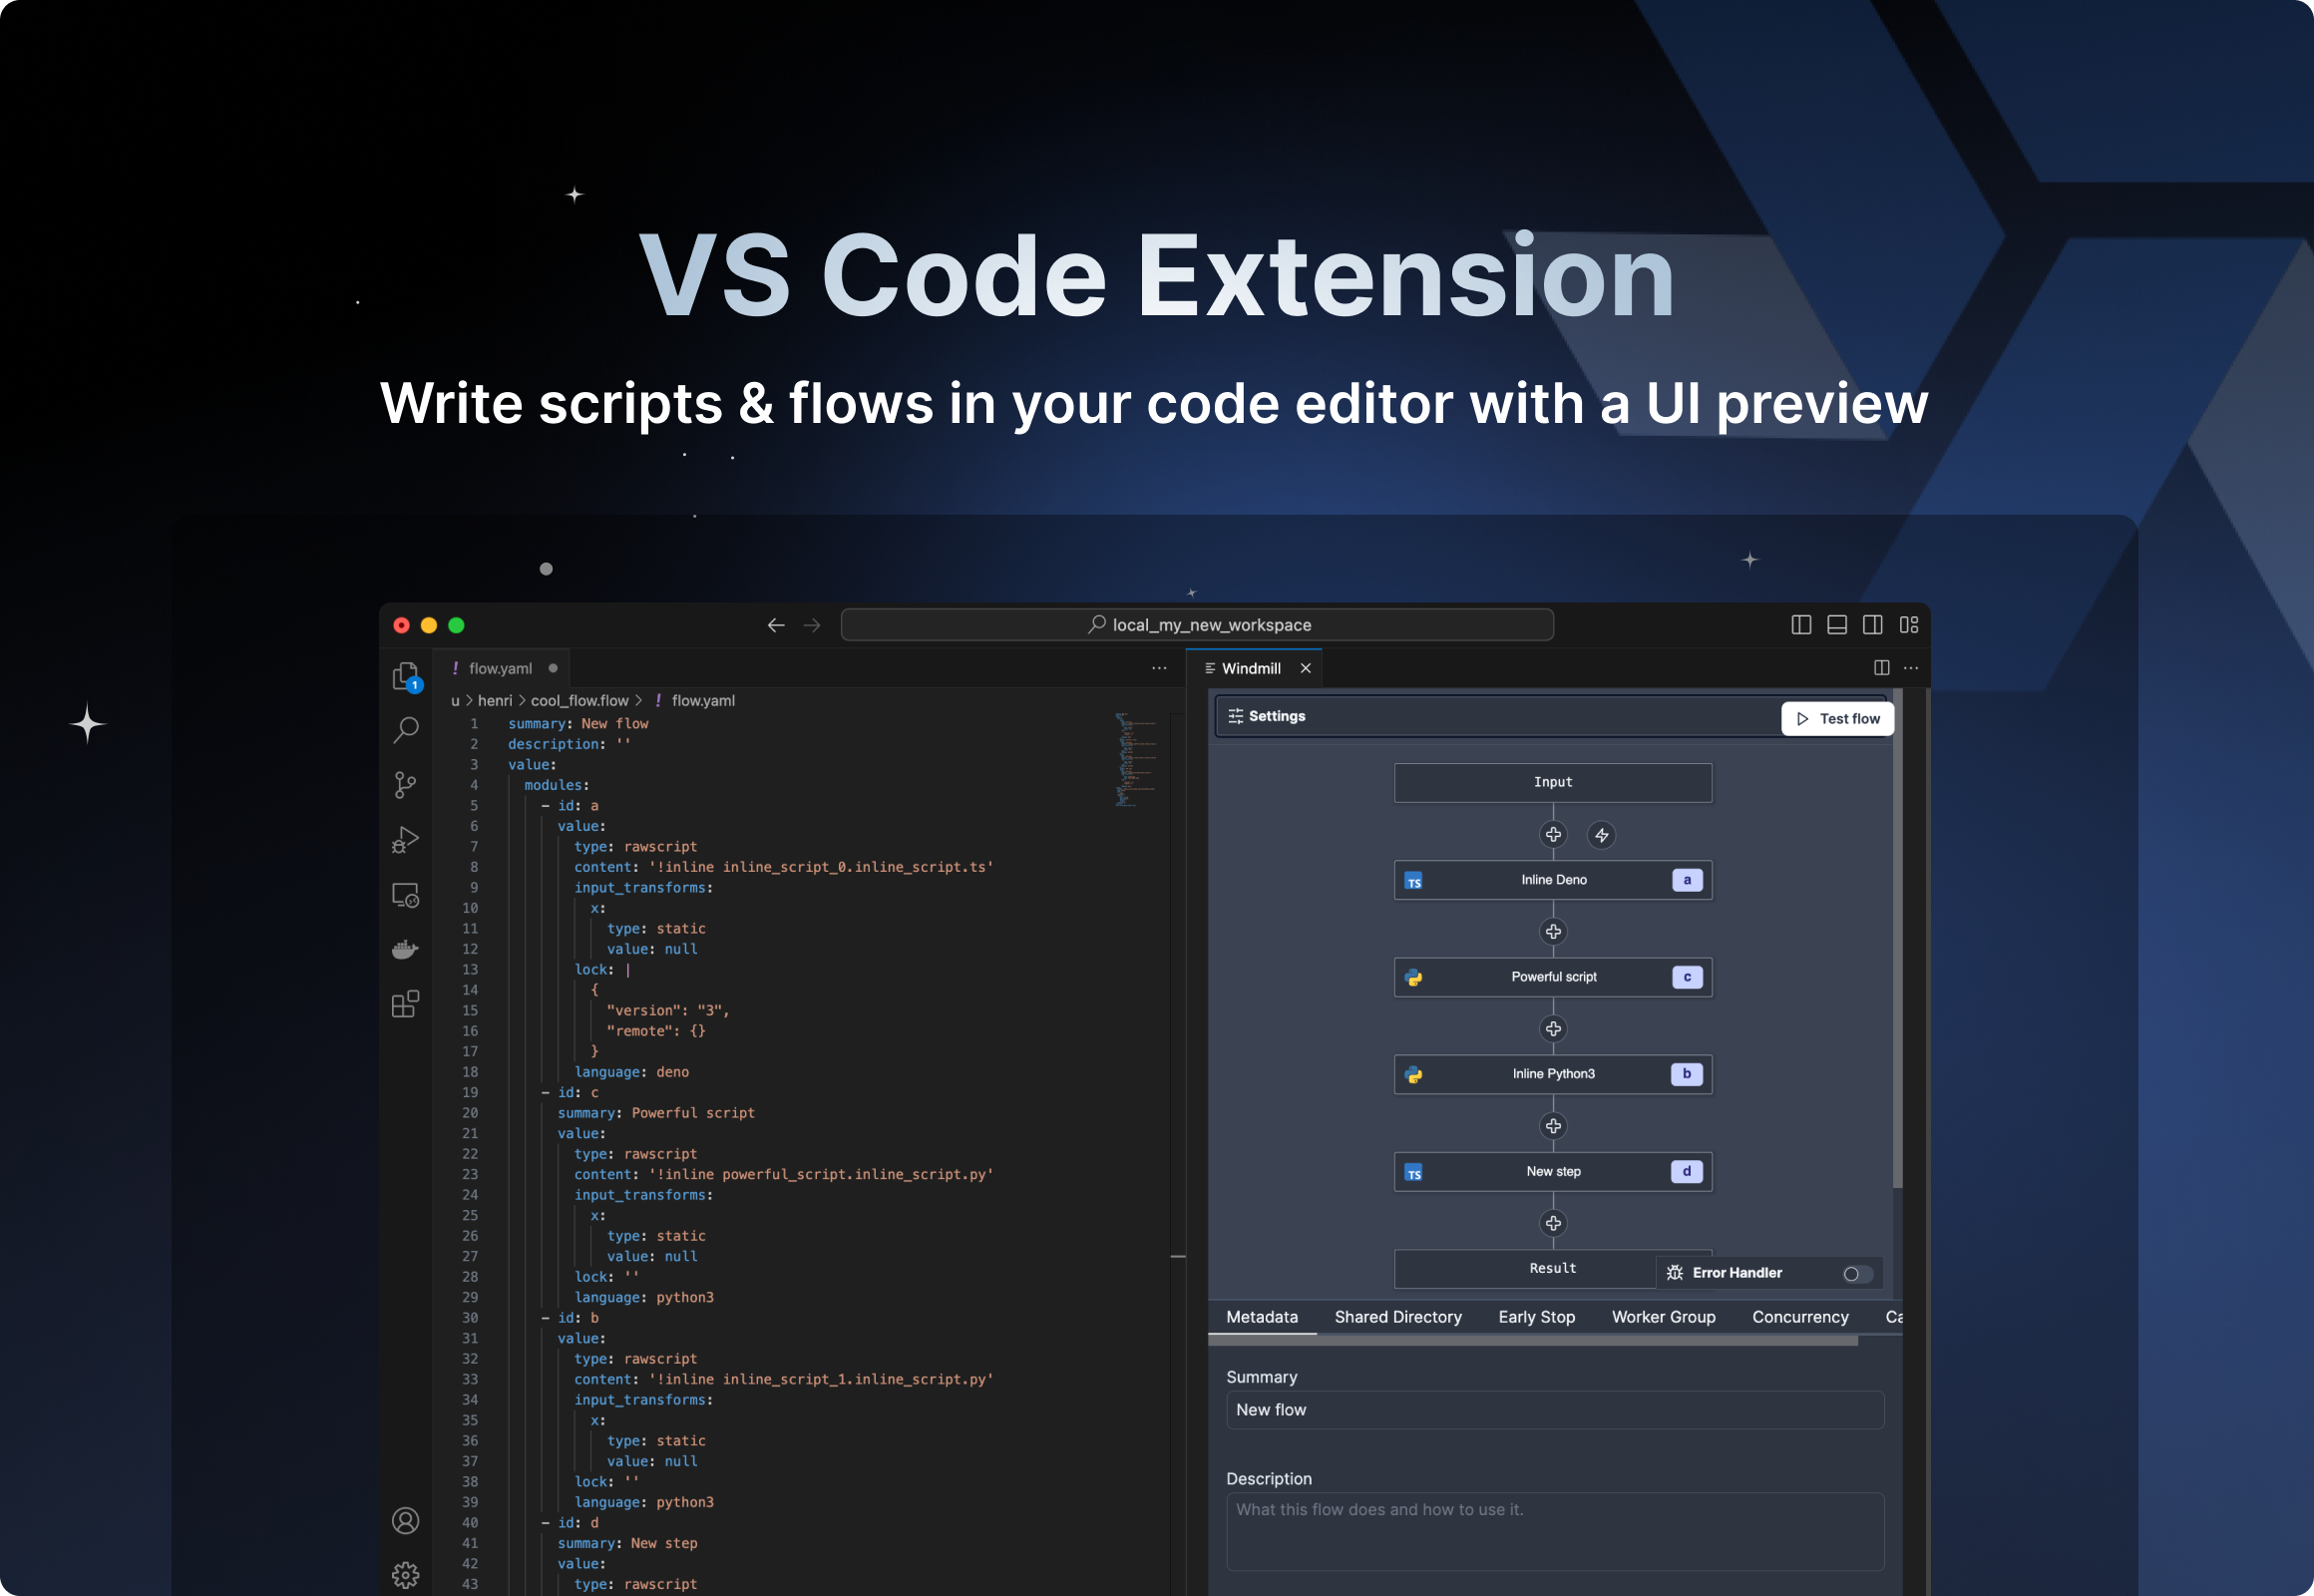 VS Code Extension